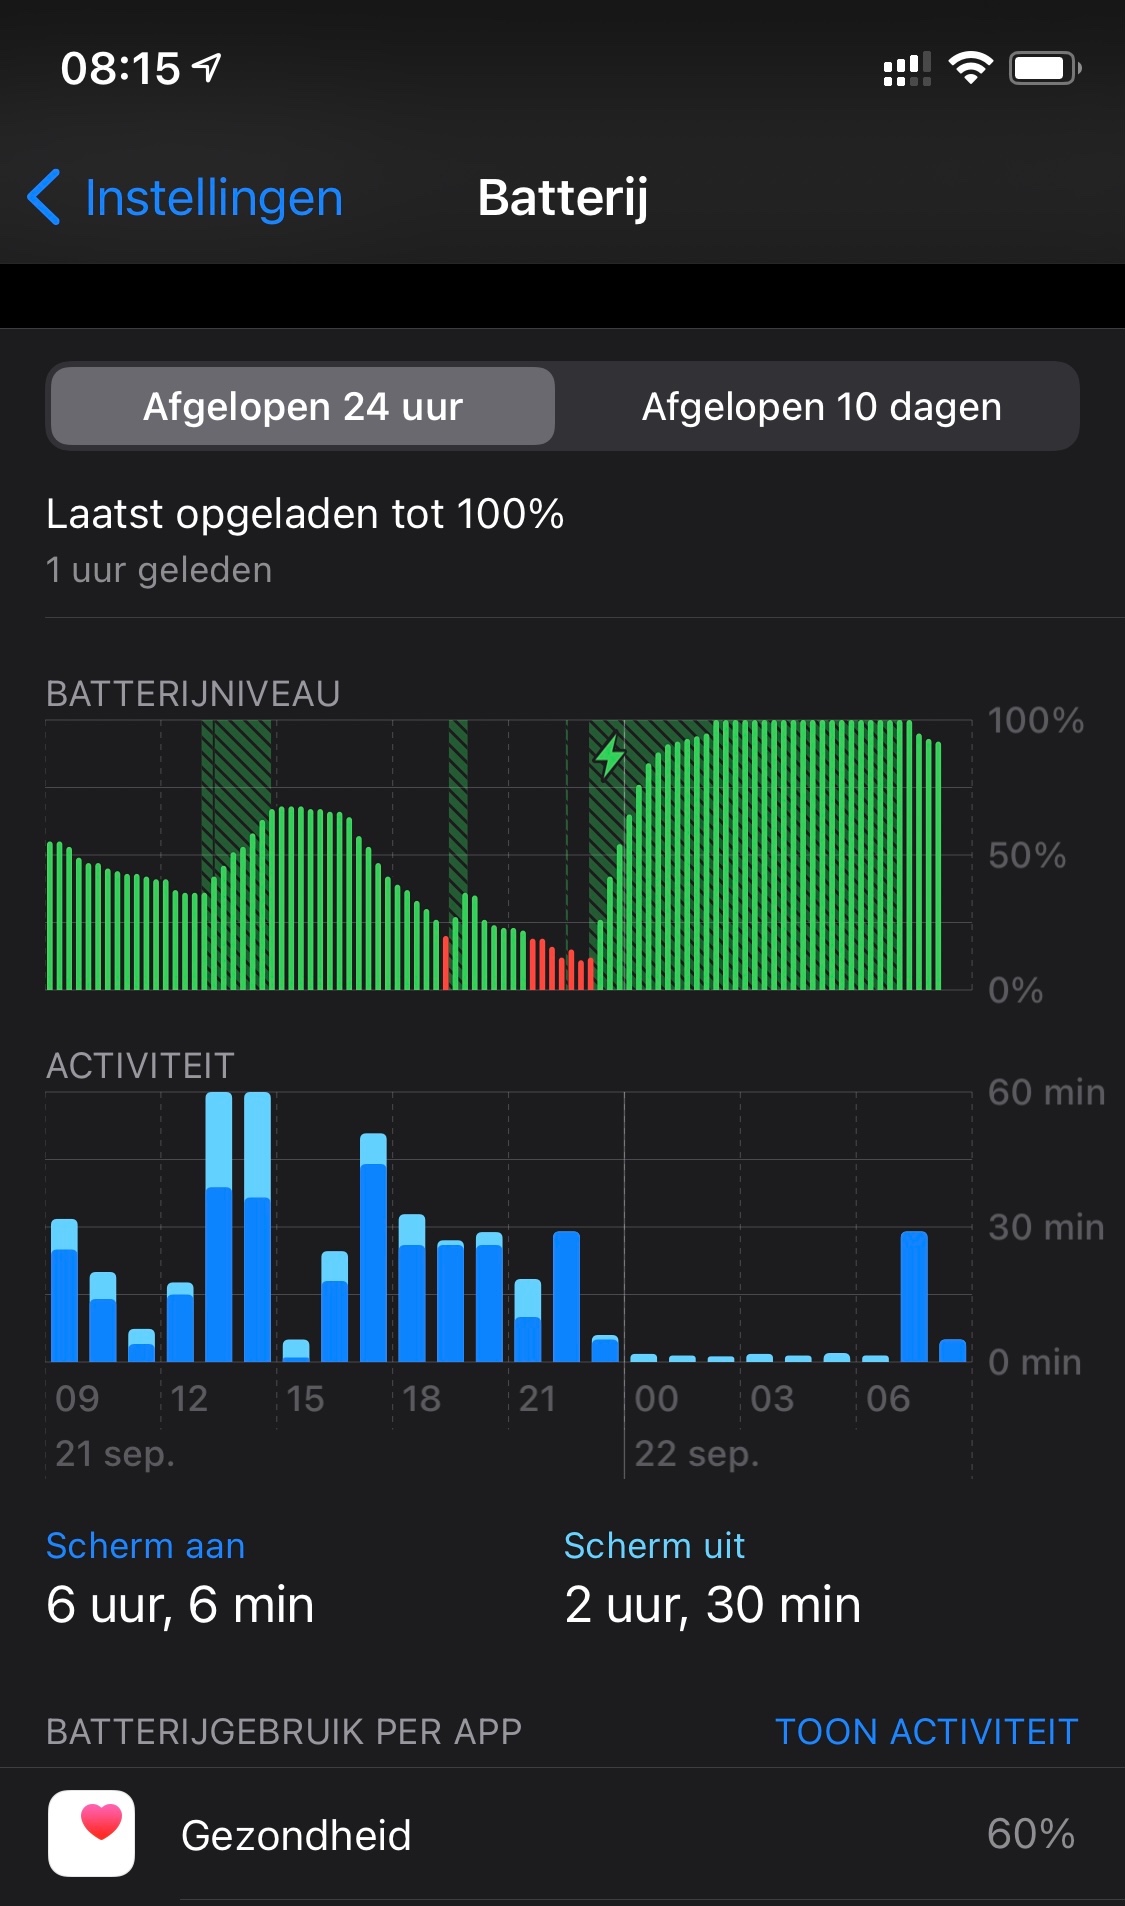 Health app draining battery on iOS14 - Apple Community